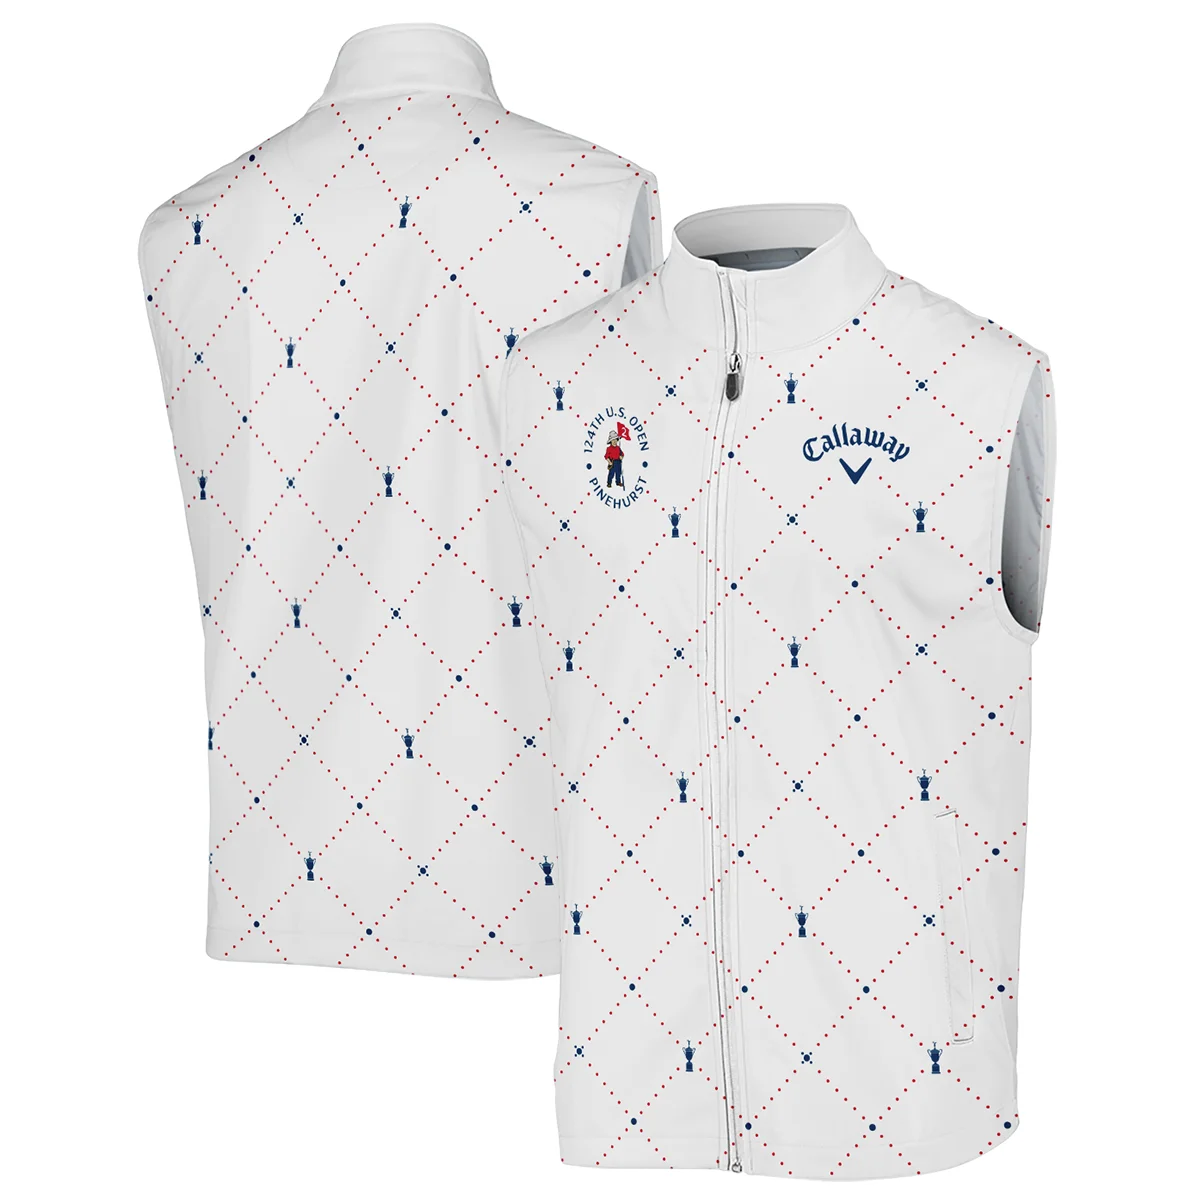 Argyle Pattern With Cup 124th U.S. Open Pinehurst Callaway Unisex Sweatshirt Style Classic Sweatshirt